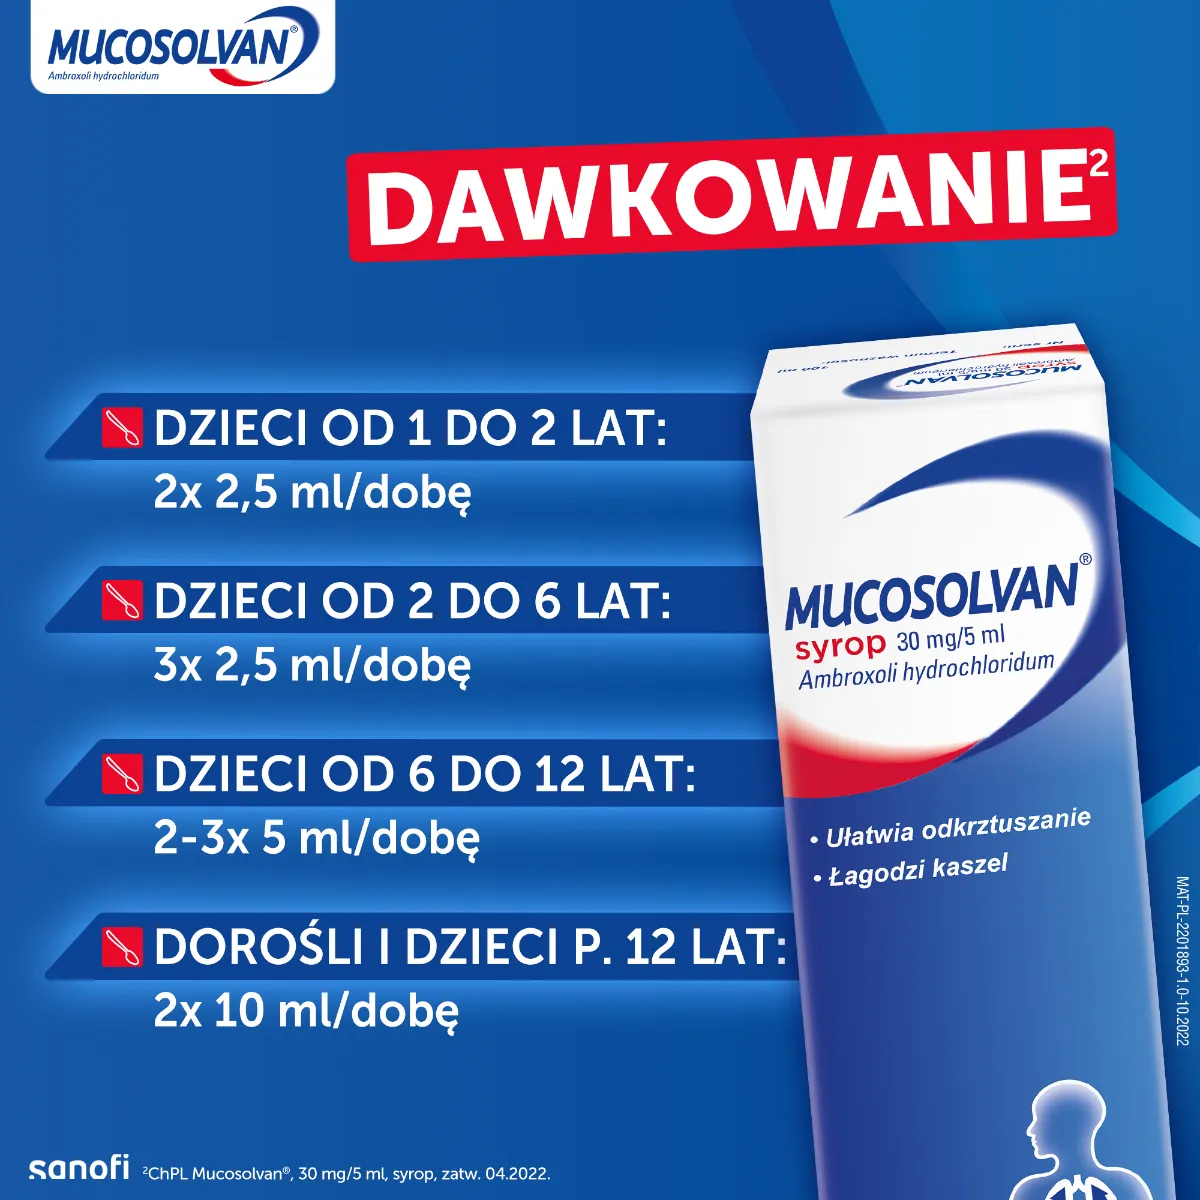 Mucosolvan syrop, 30 mg / 5 ml Ambroxoli hydrochloridum, 100 ml 